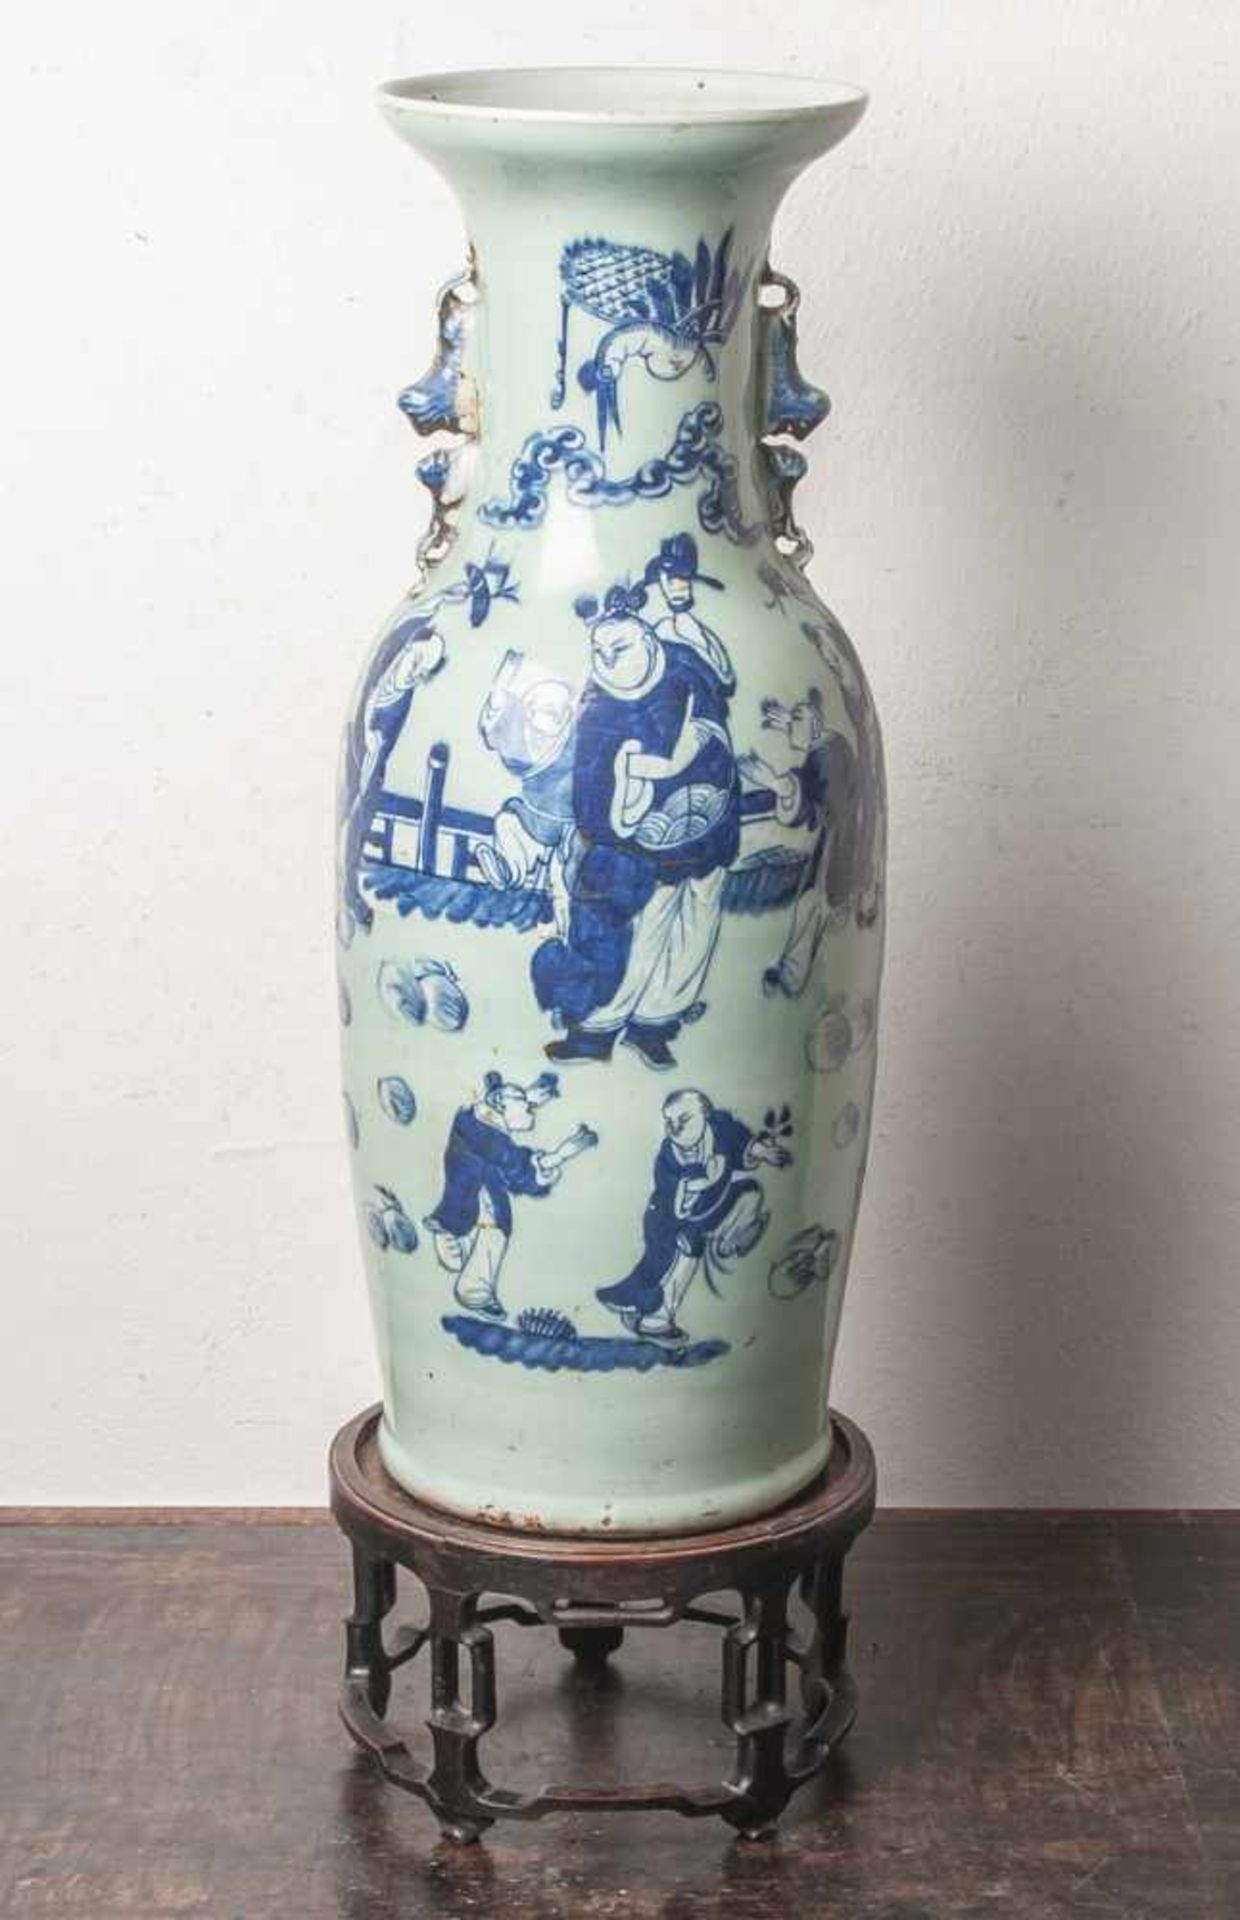 Bodenvase (wohl 18. Jarhundert, China), Porzellan, spielende Knaben, blau bemalt, grauunterfangen,